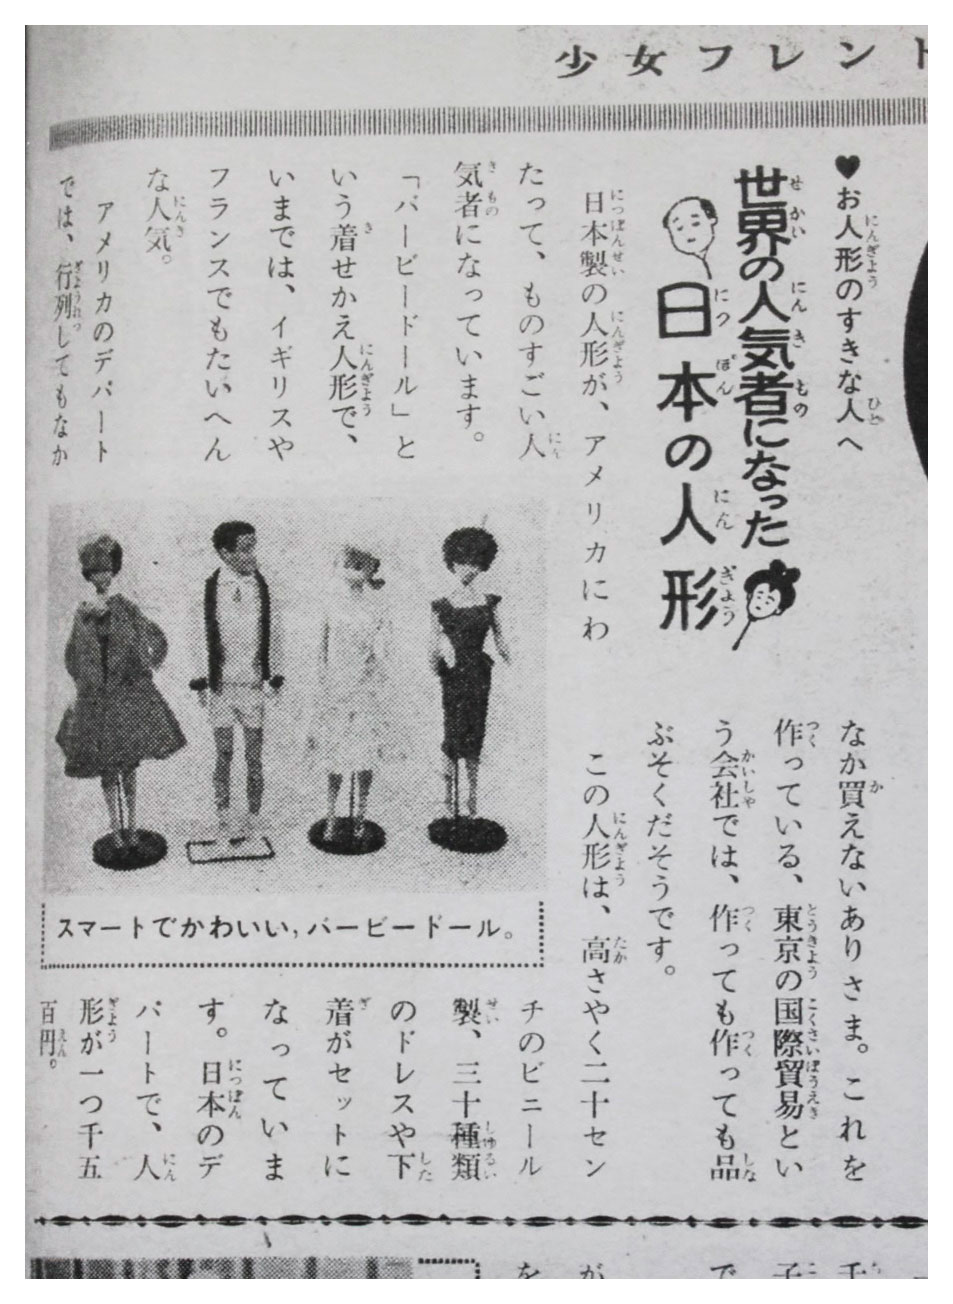 From 1964 Japanese Friend magazine (23 Feb)